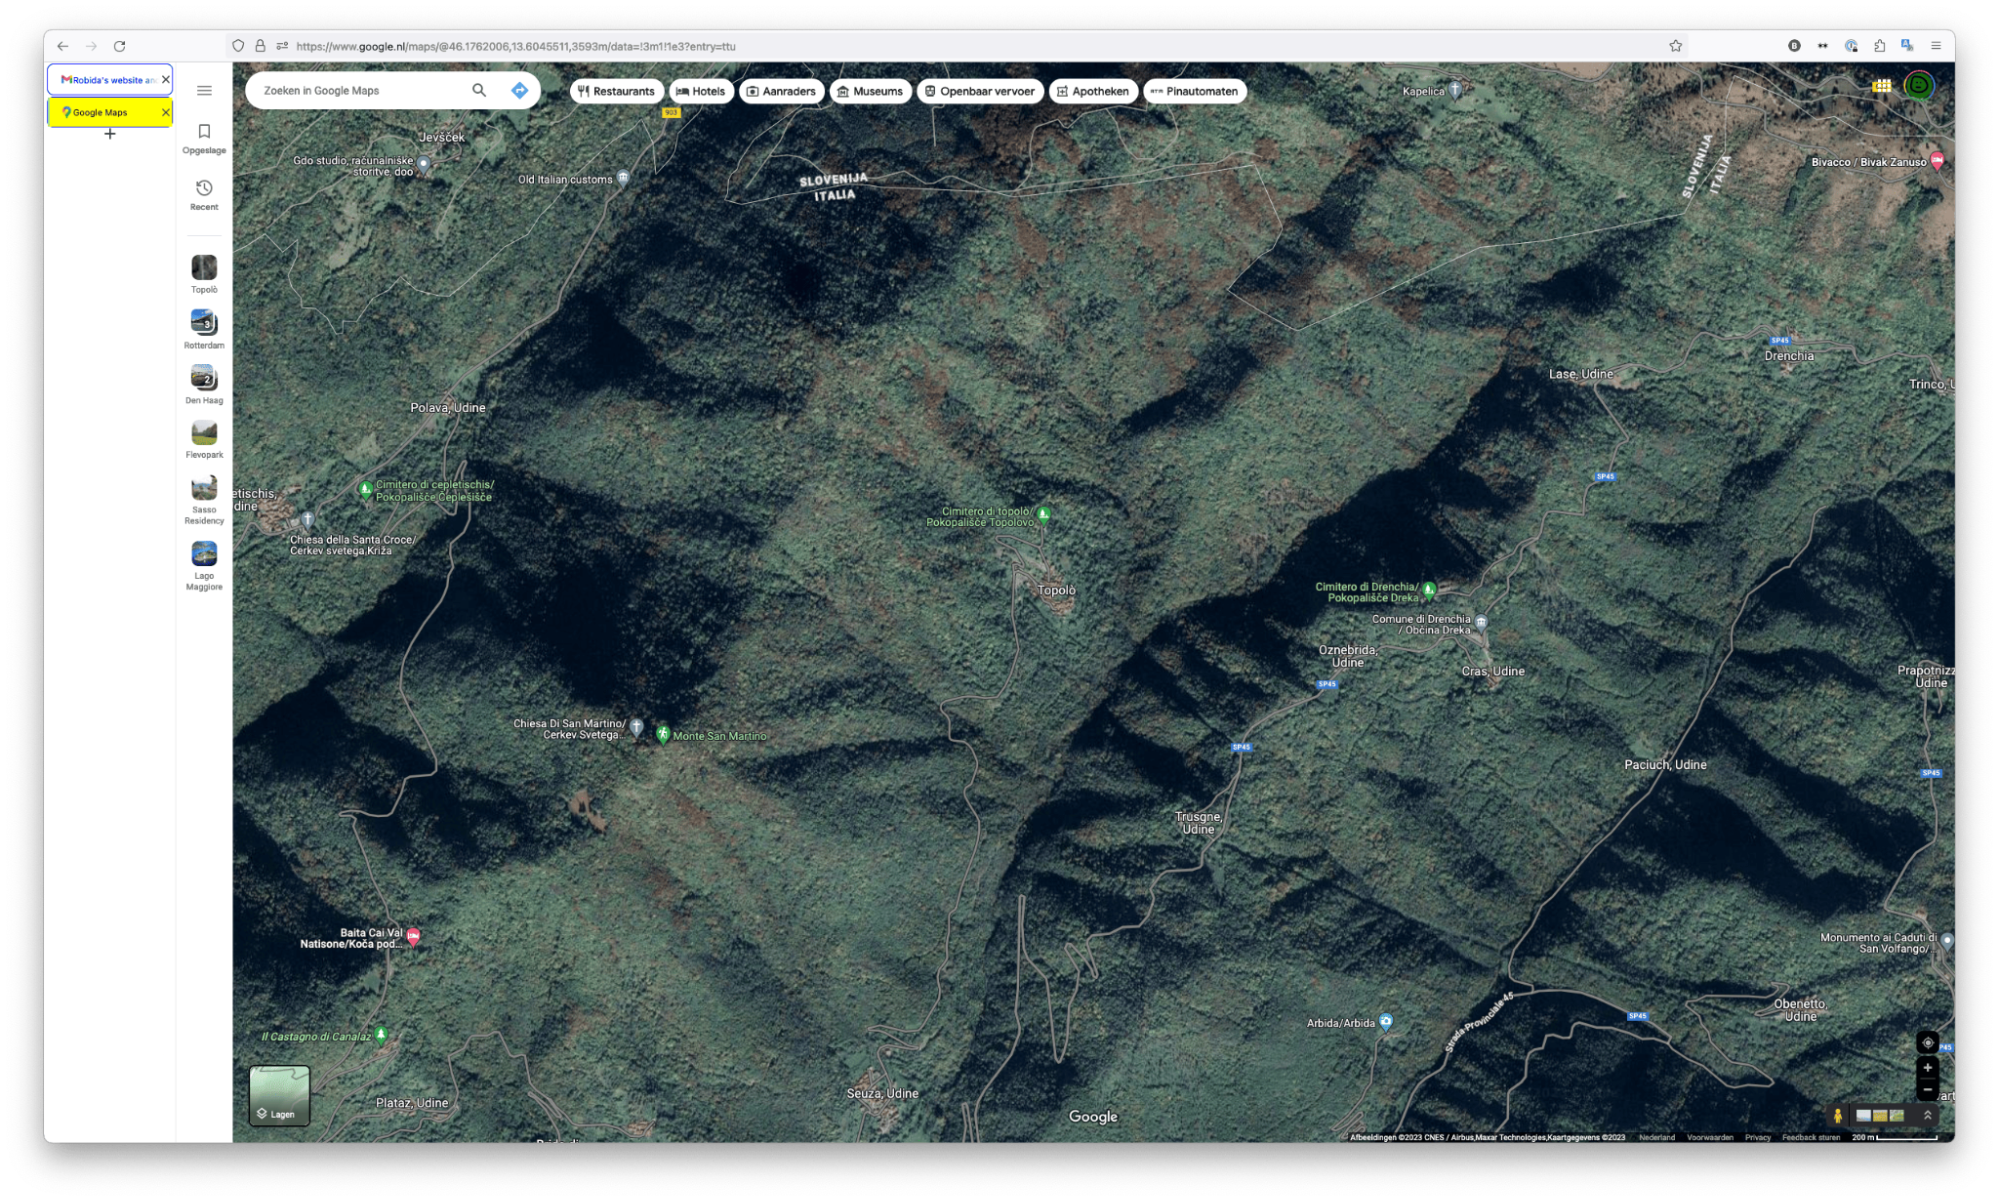 Topolò from Google Maps. [A digital map showing green mountainous terrain.]